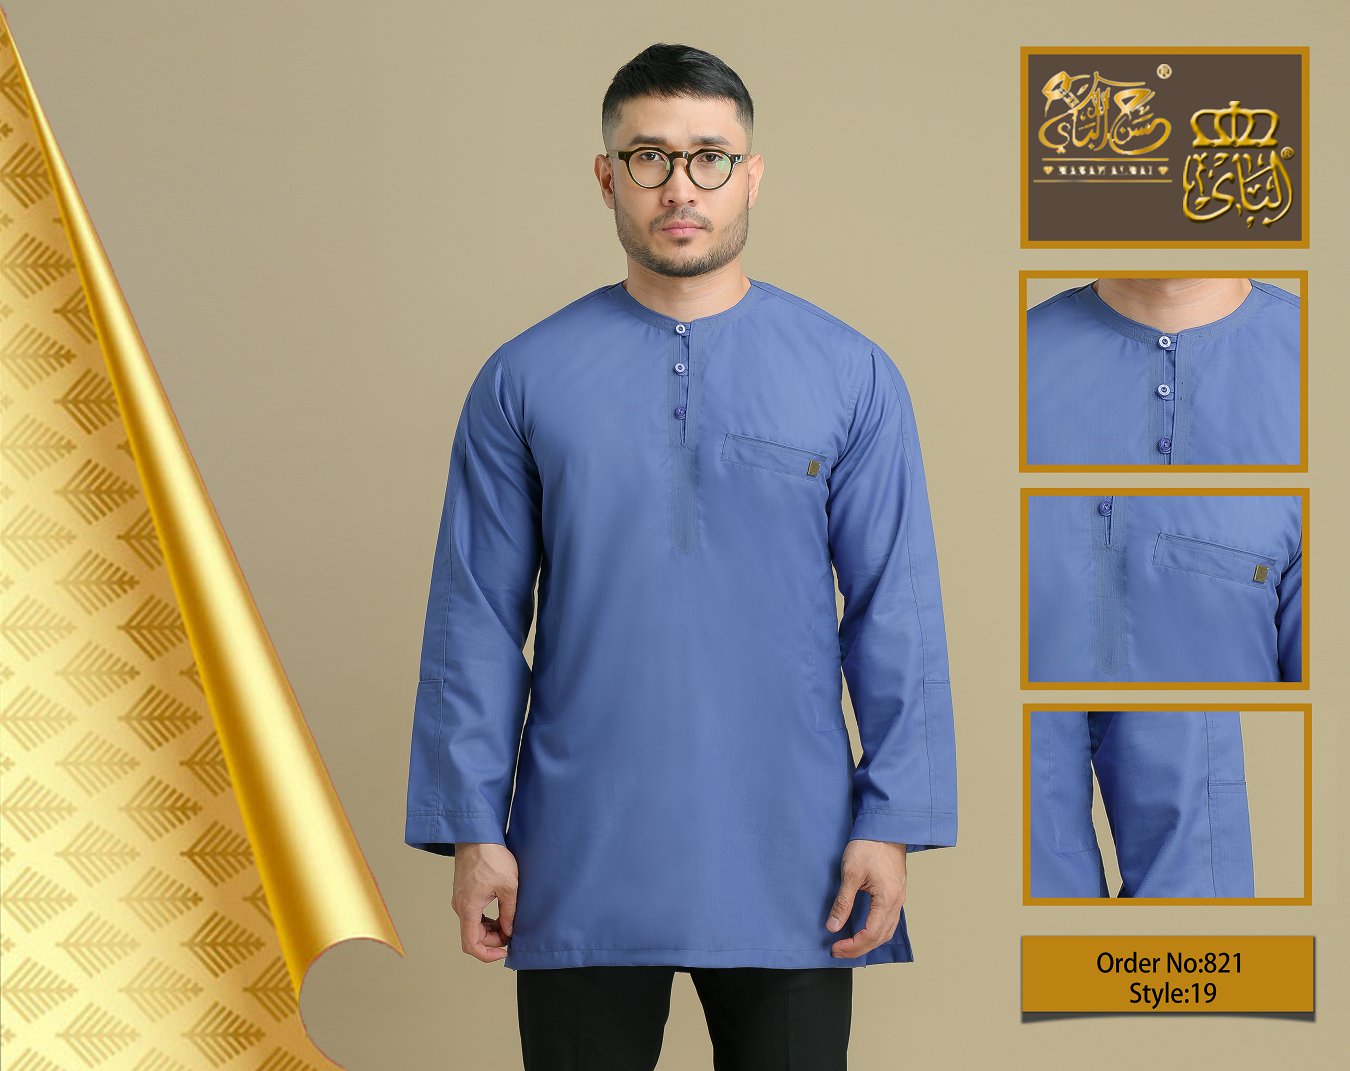 Malay clothing67